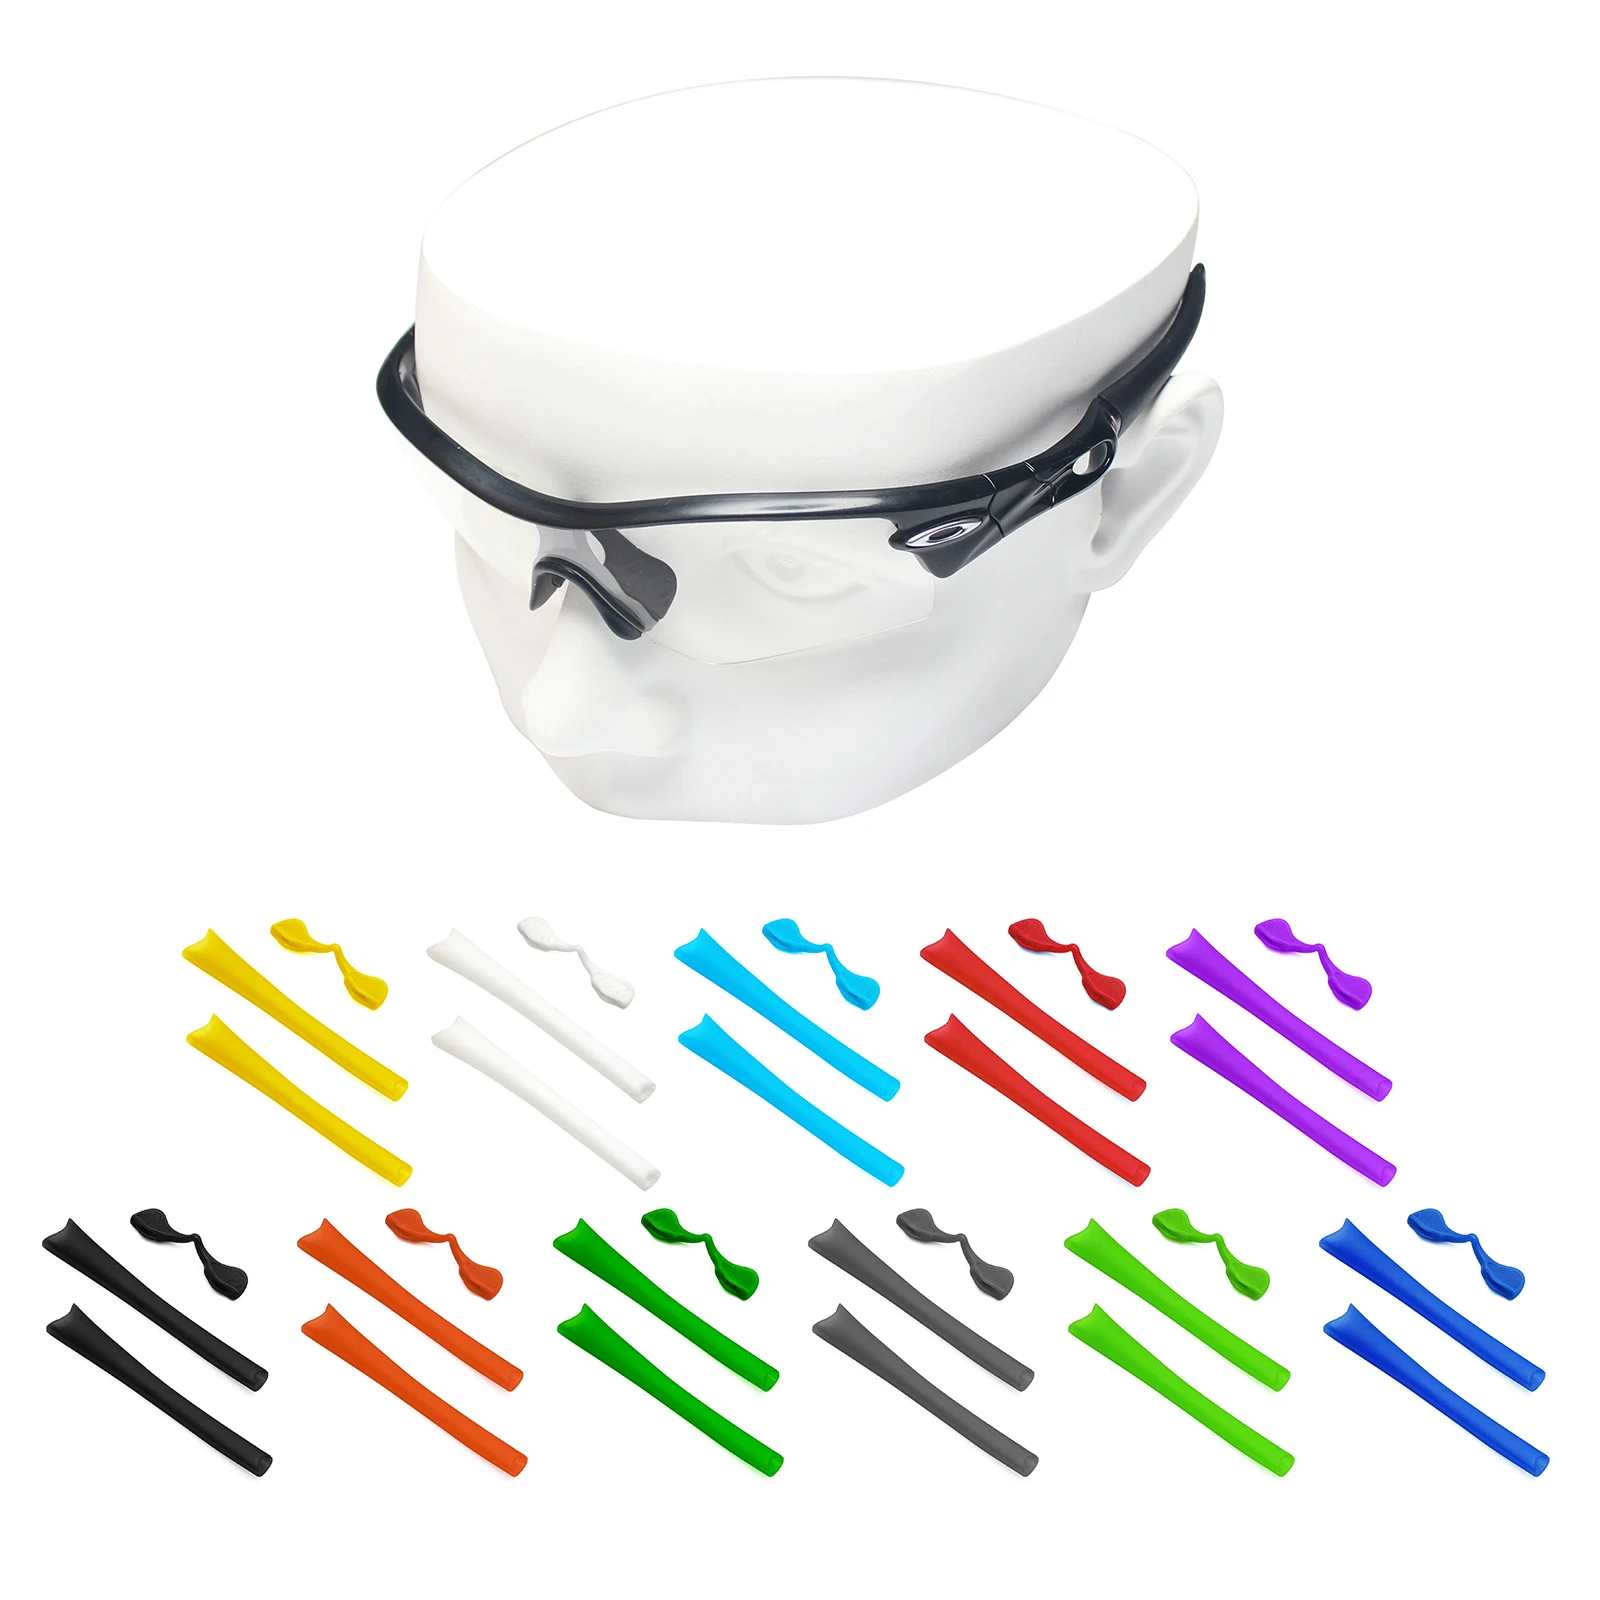 OOWLIT Rubber Kits Nose Pads & Earsocks for-Oakley Radar Path Sunglasses